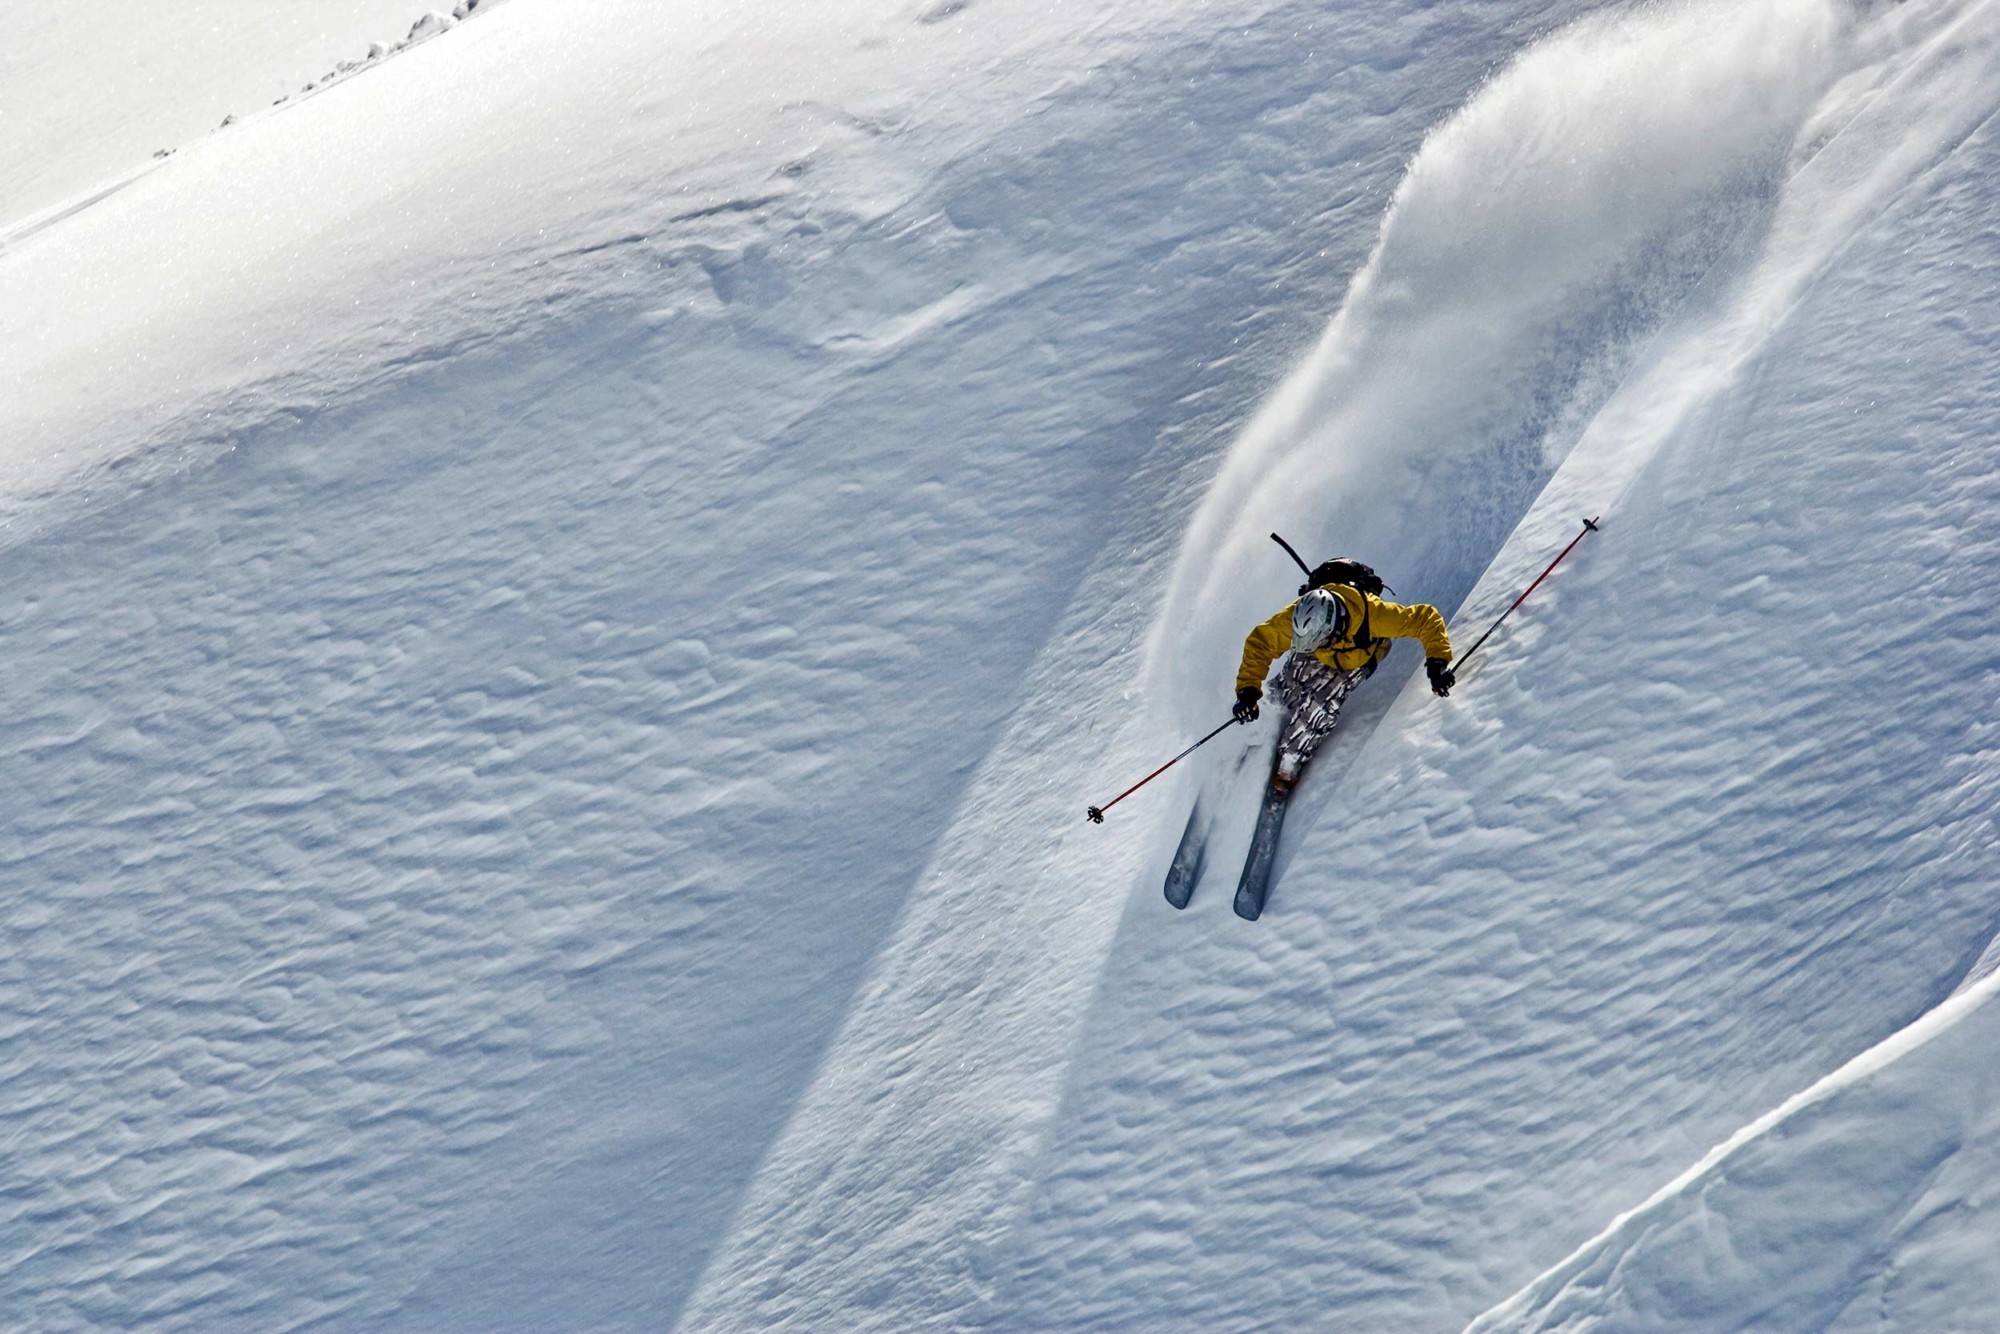 Skier In Powder Snow